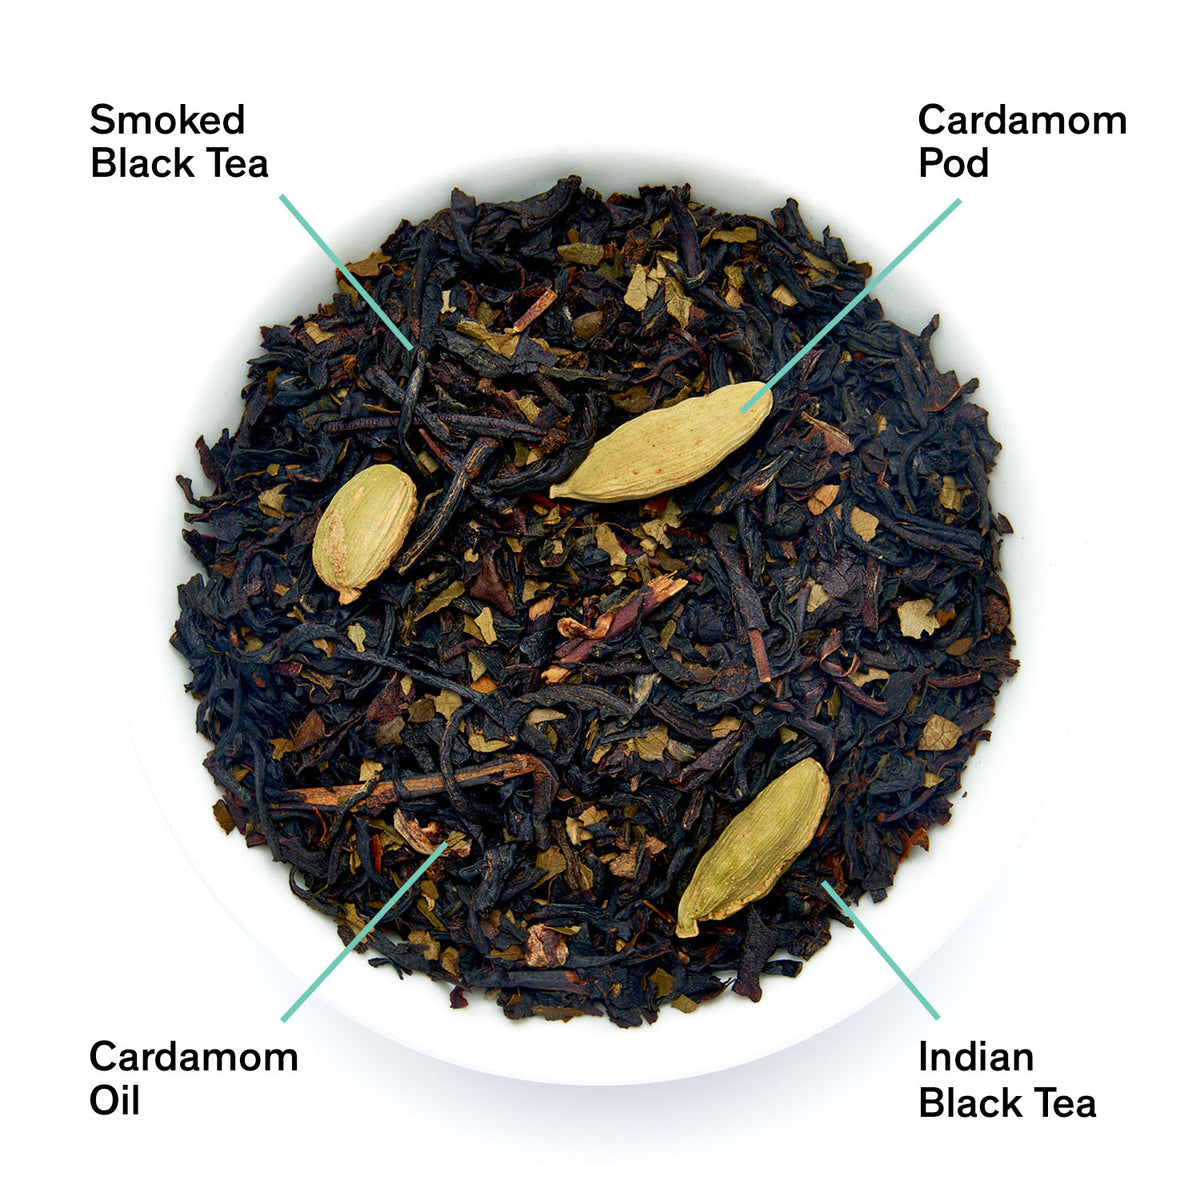 Civil Disobedience: Smoky Cardamom Black Tea